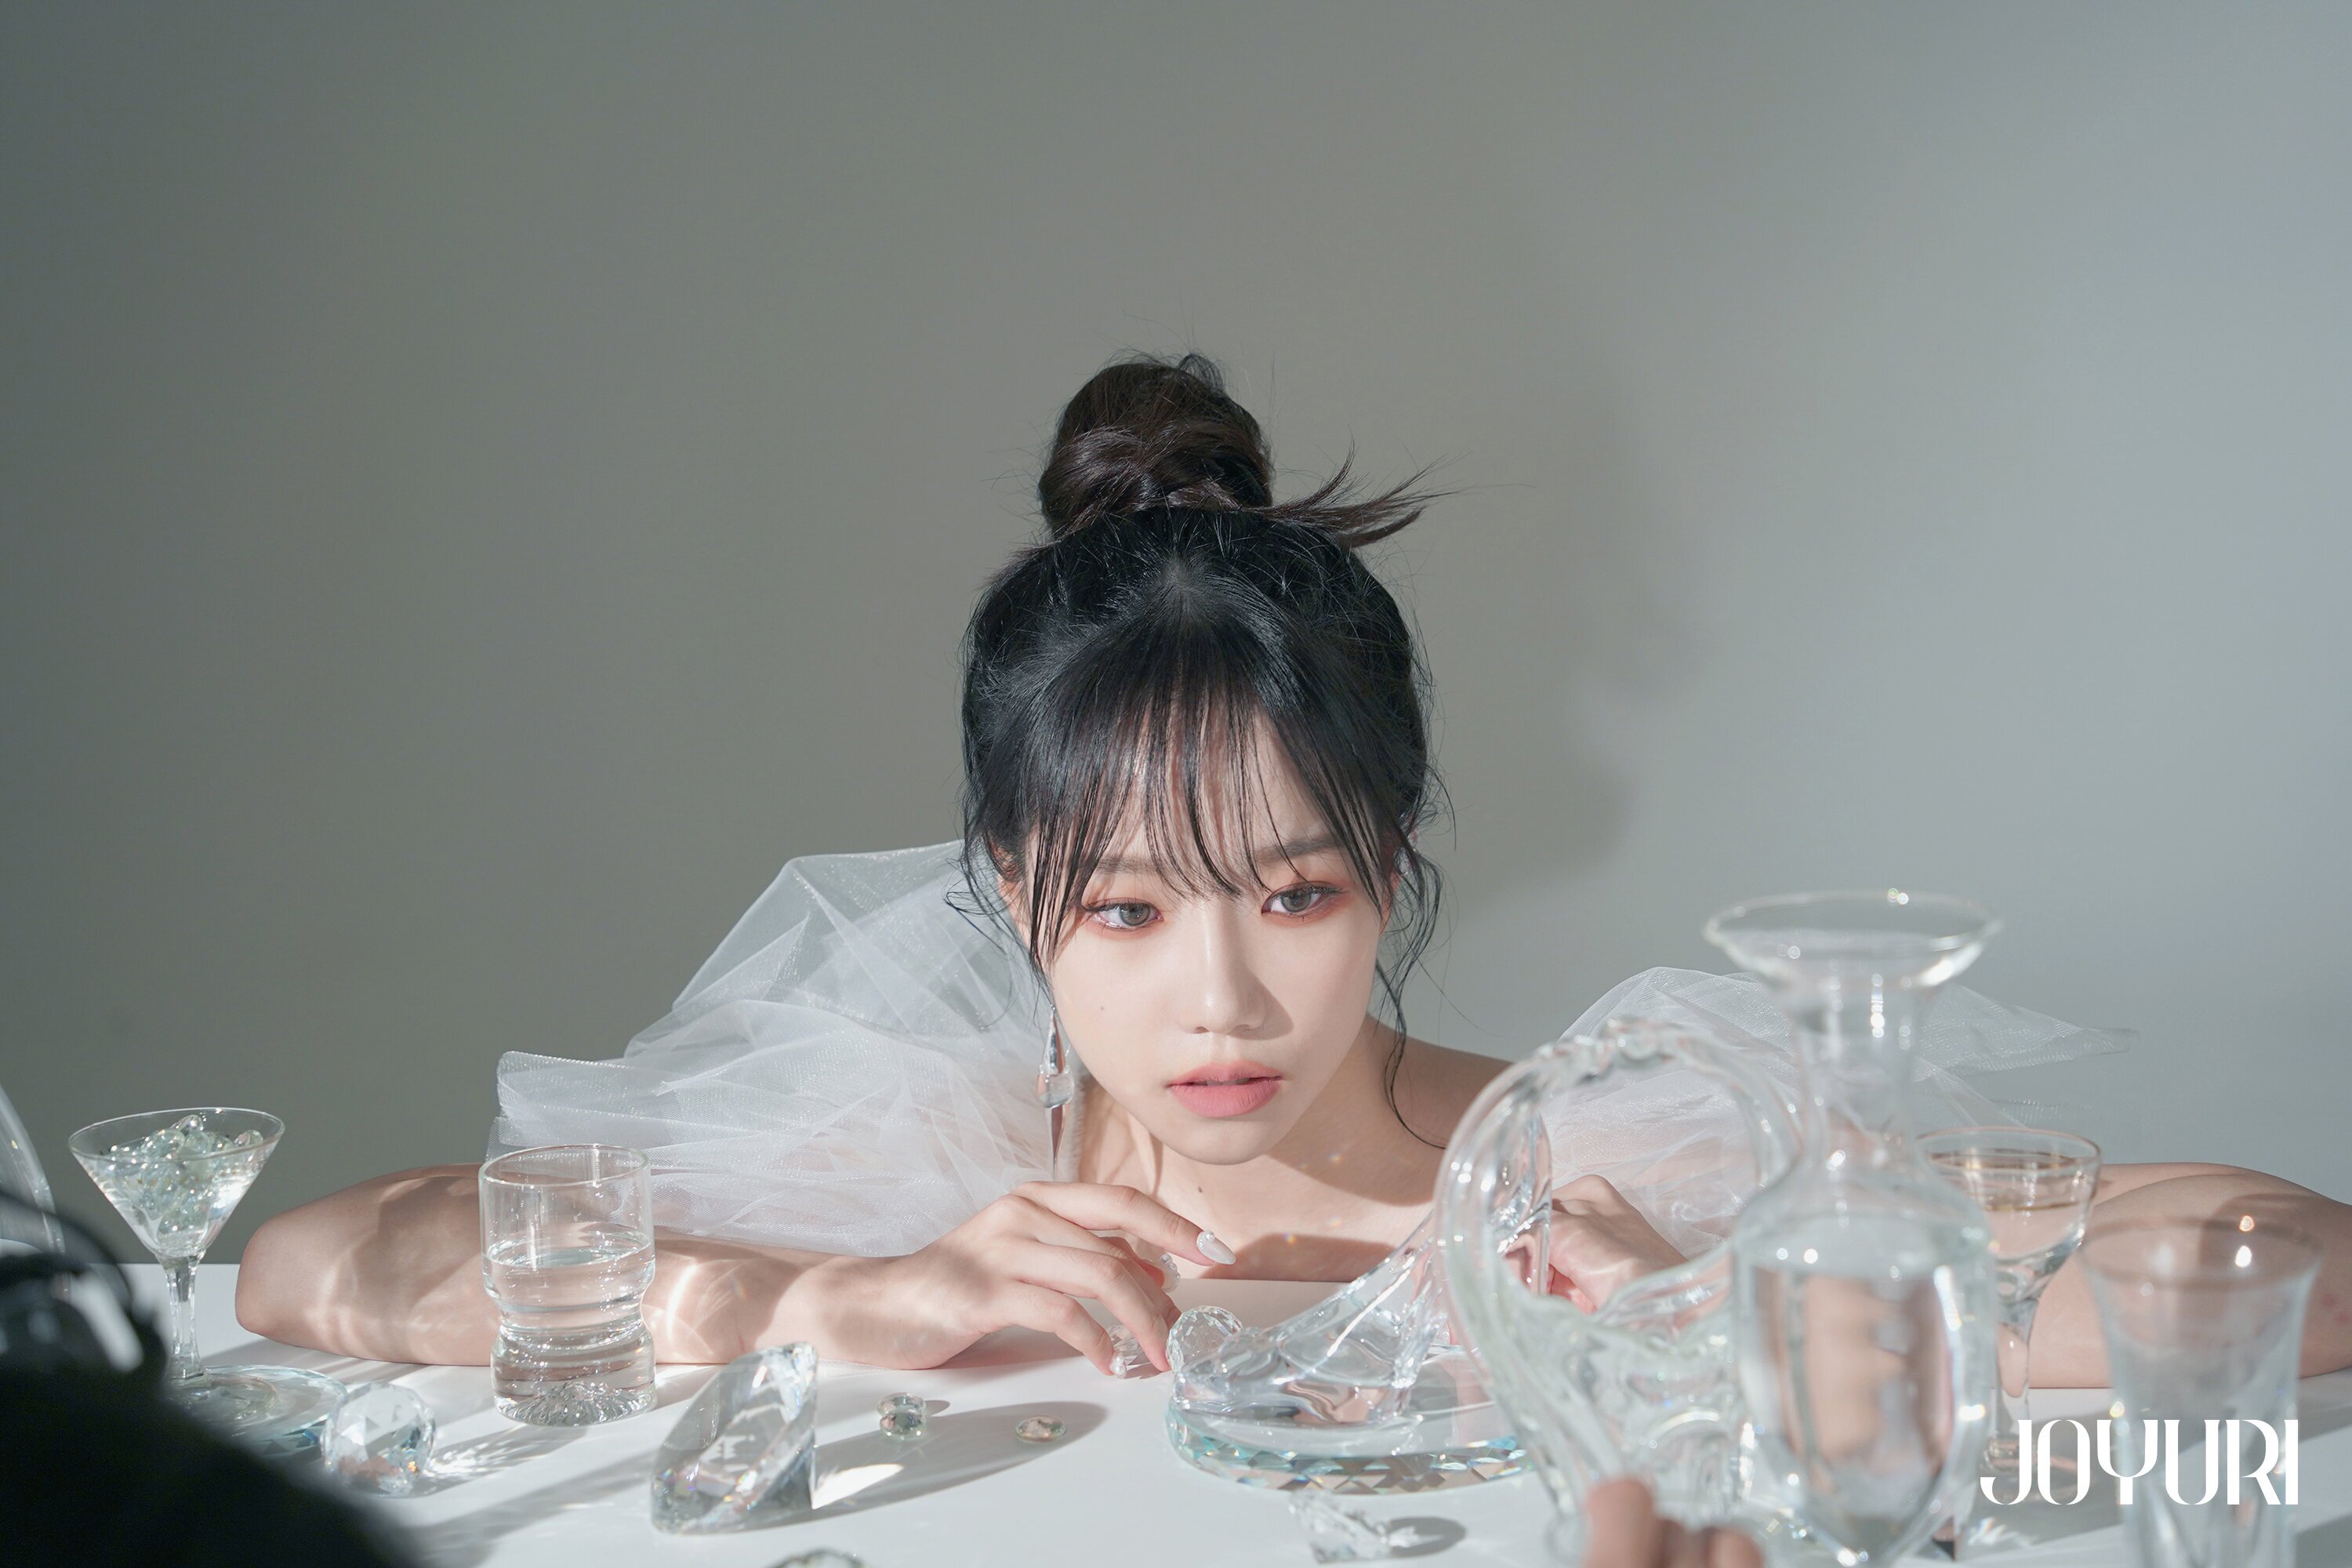 211011 Jo Yuri Cafe Update Glassy Album Behind Kpopping